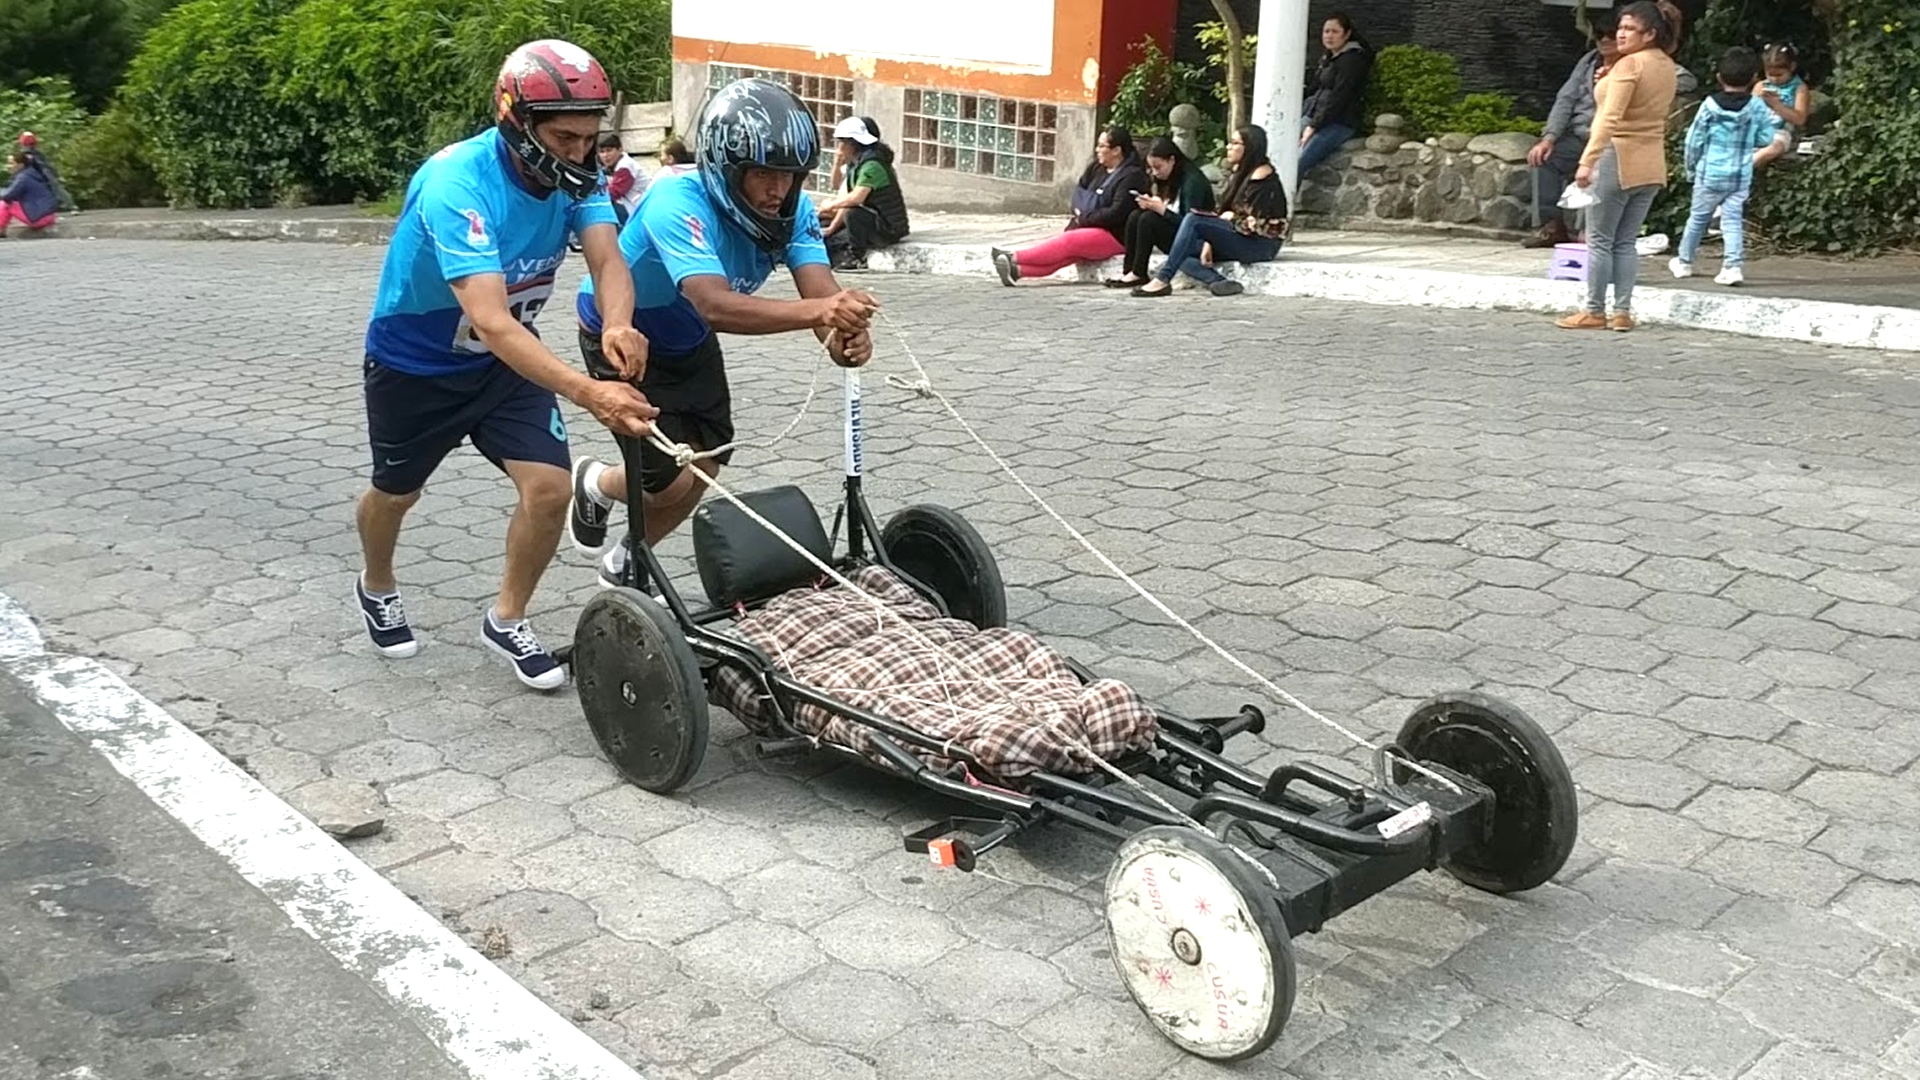 Sopabox racers in Ecuador